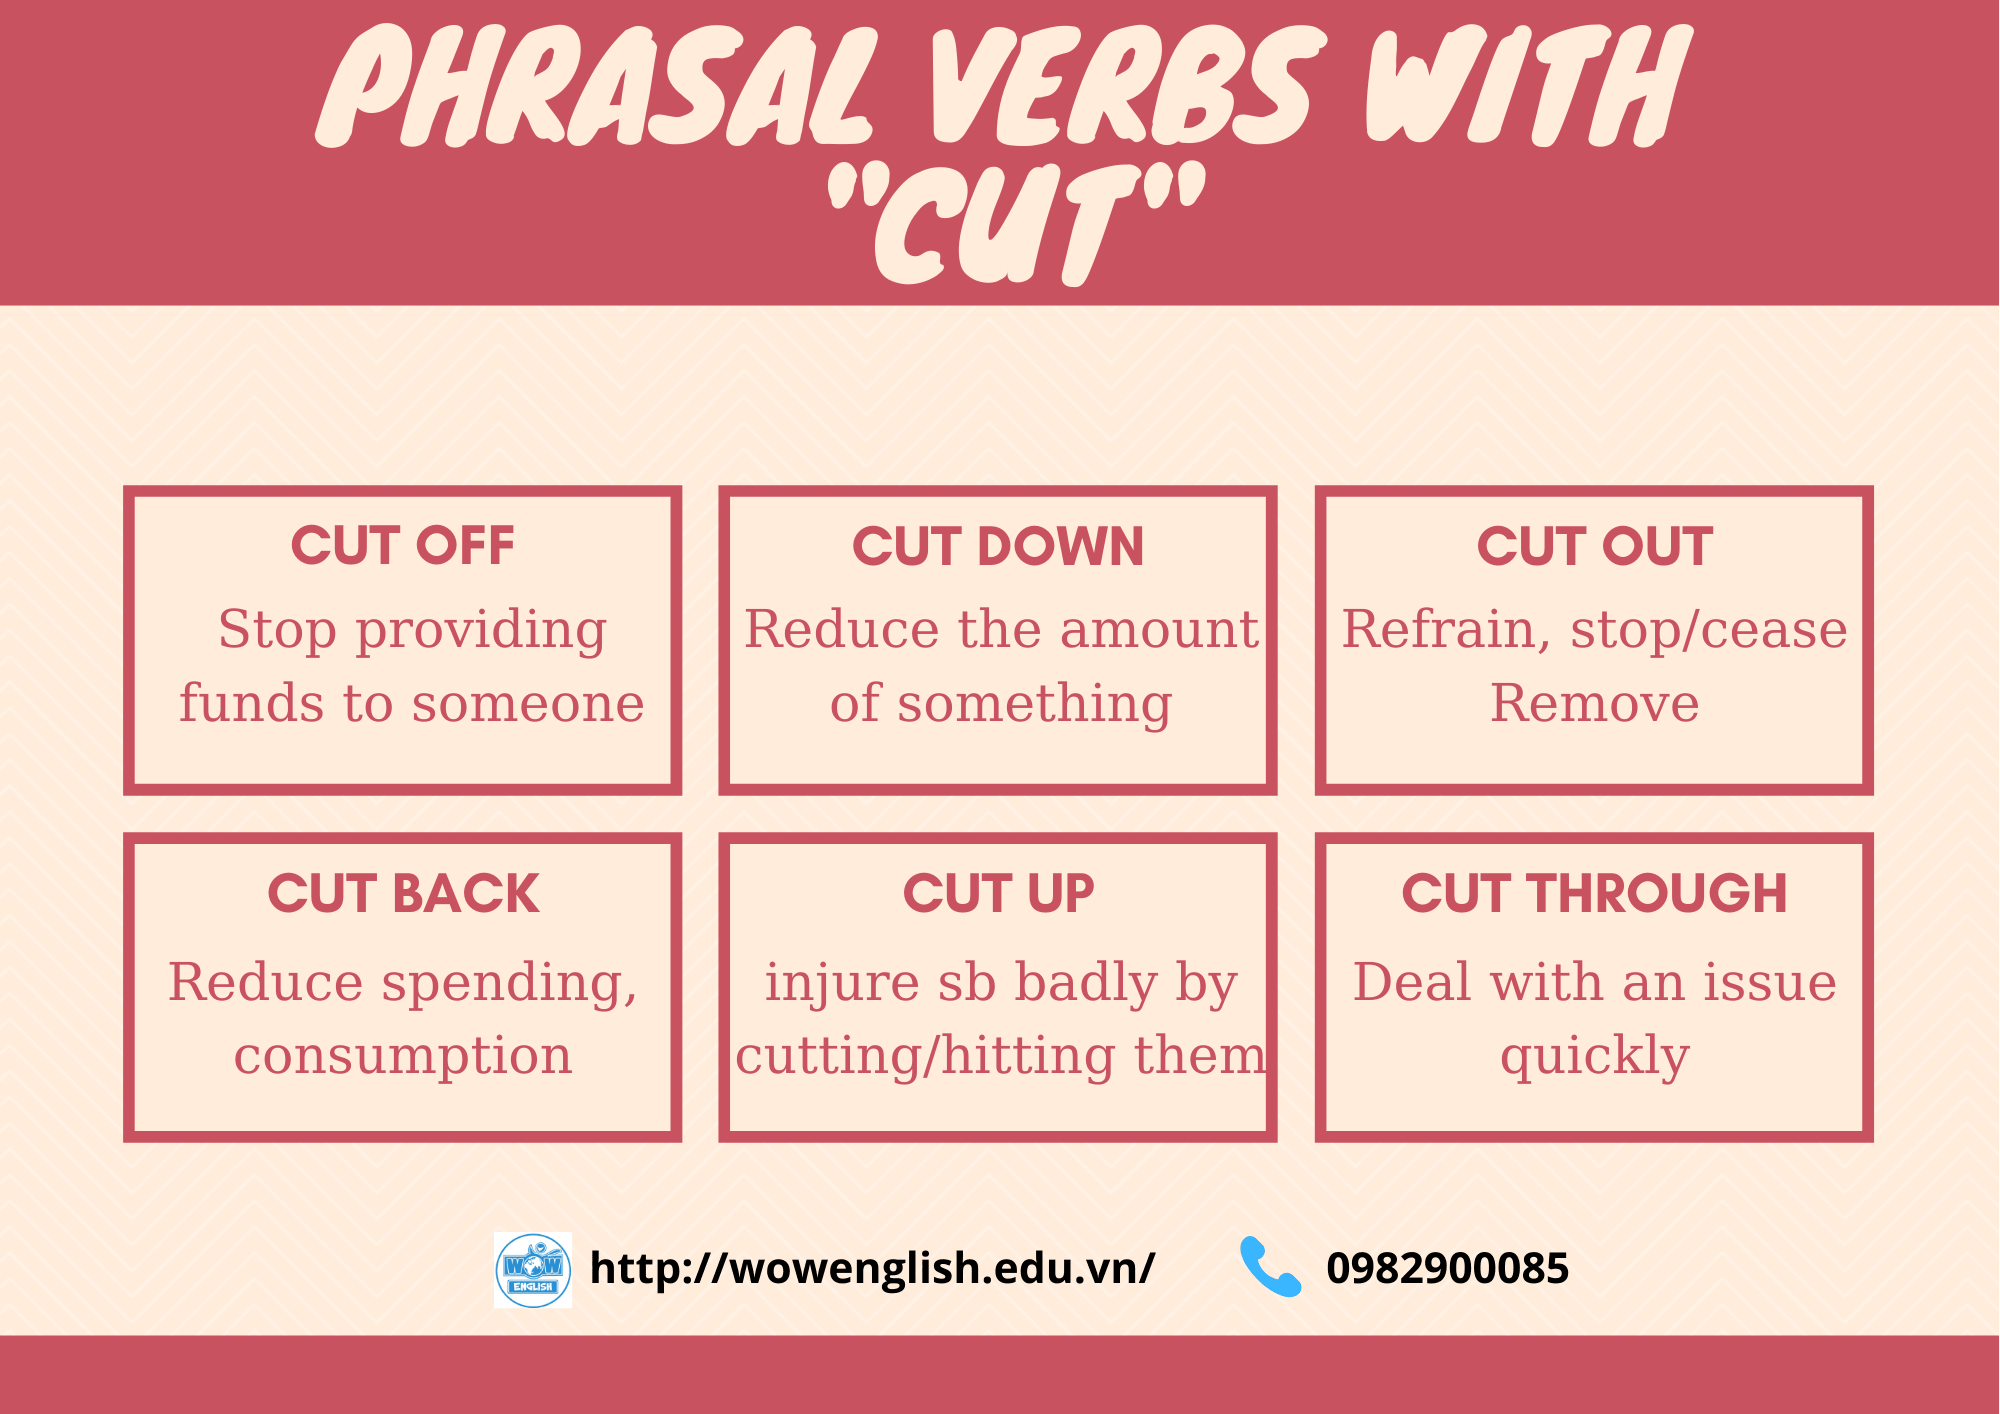 Phrasal verbs with cut